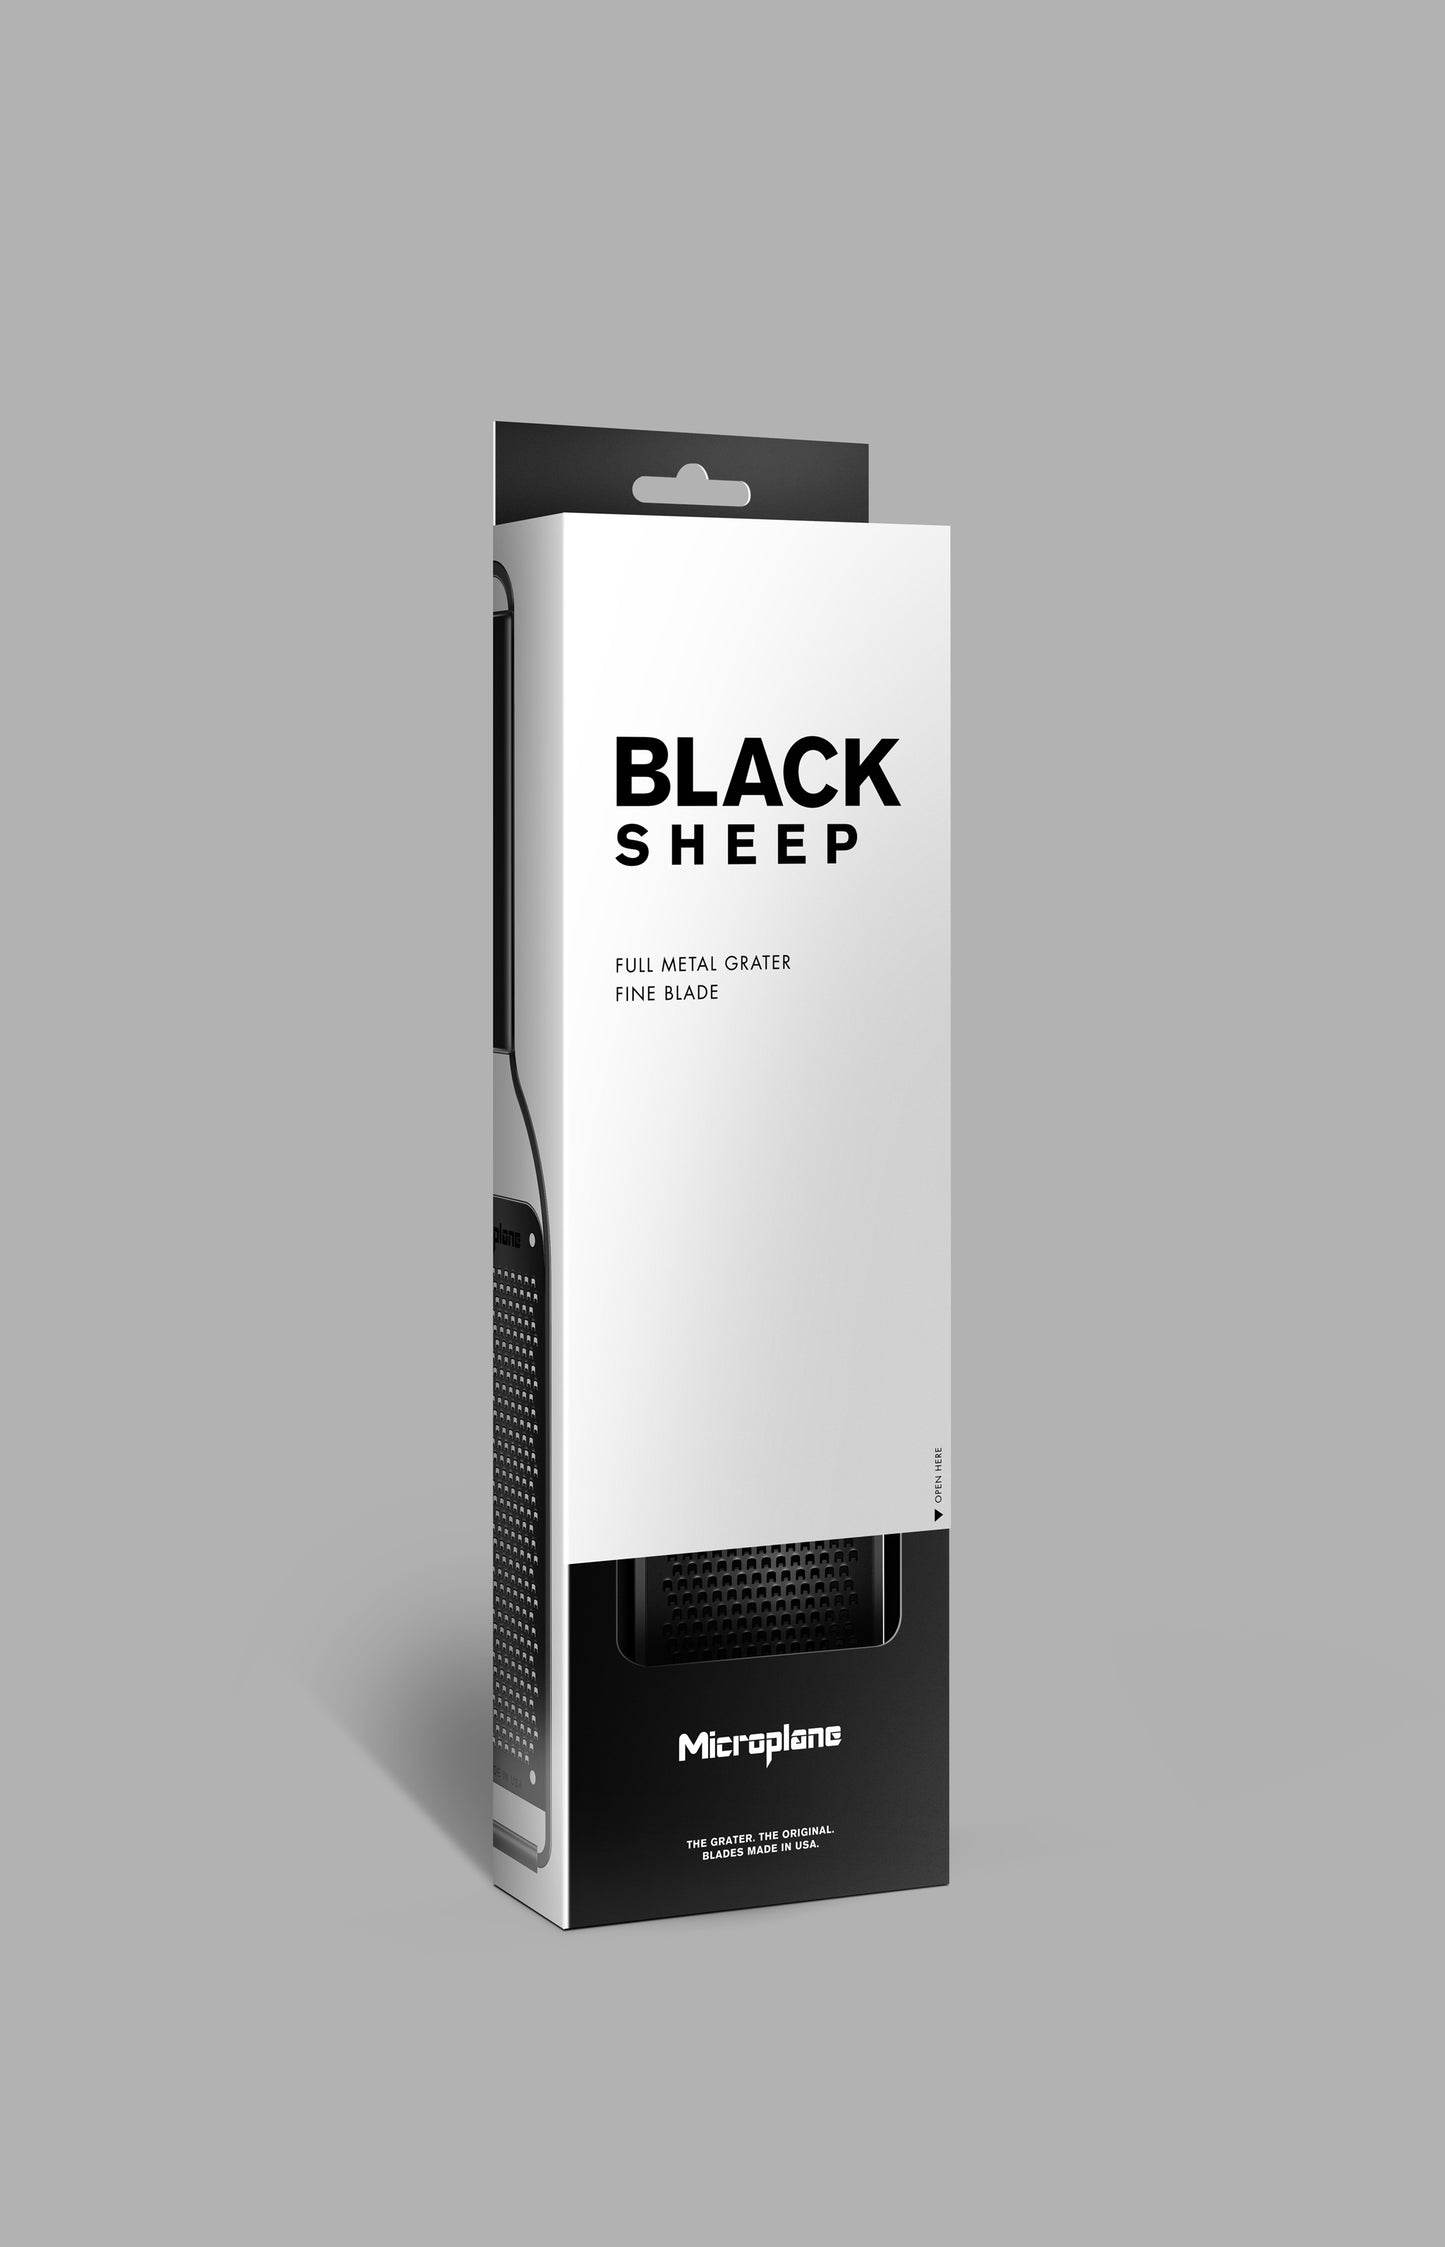 Microplane Black Sheep, fint blad